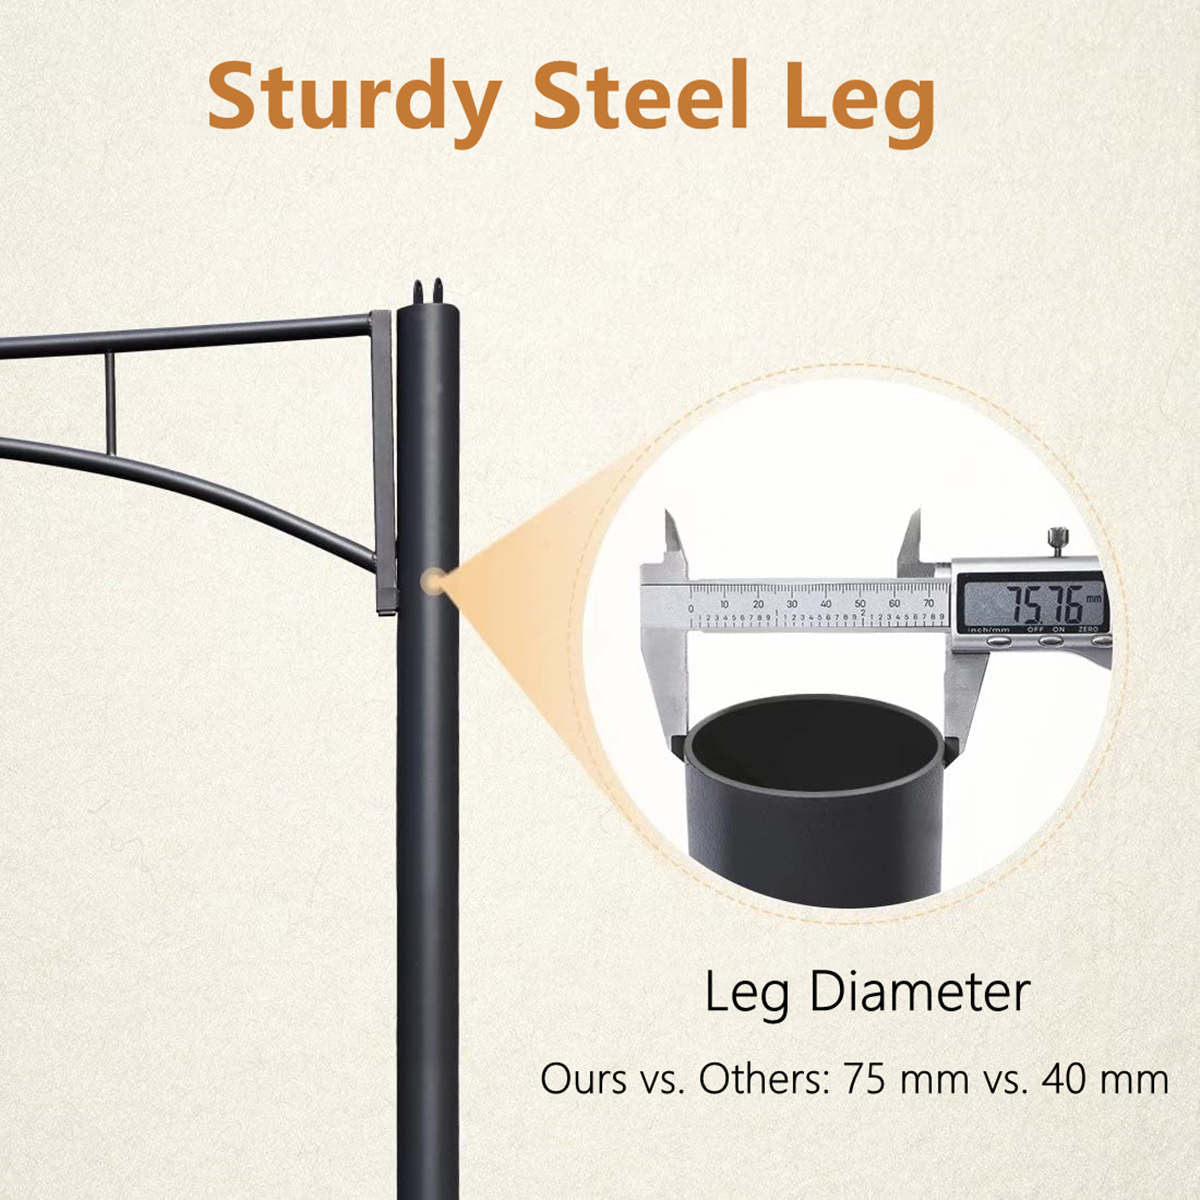 Patio Gazebo - sturdy steel leg